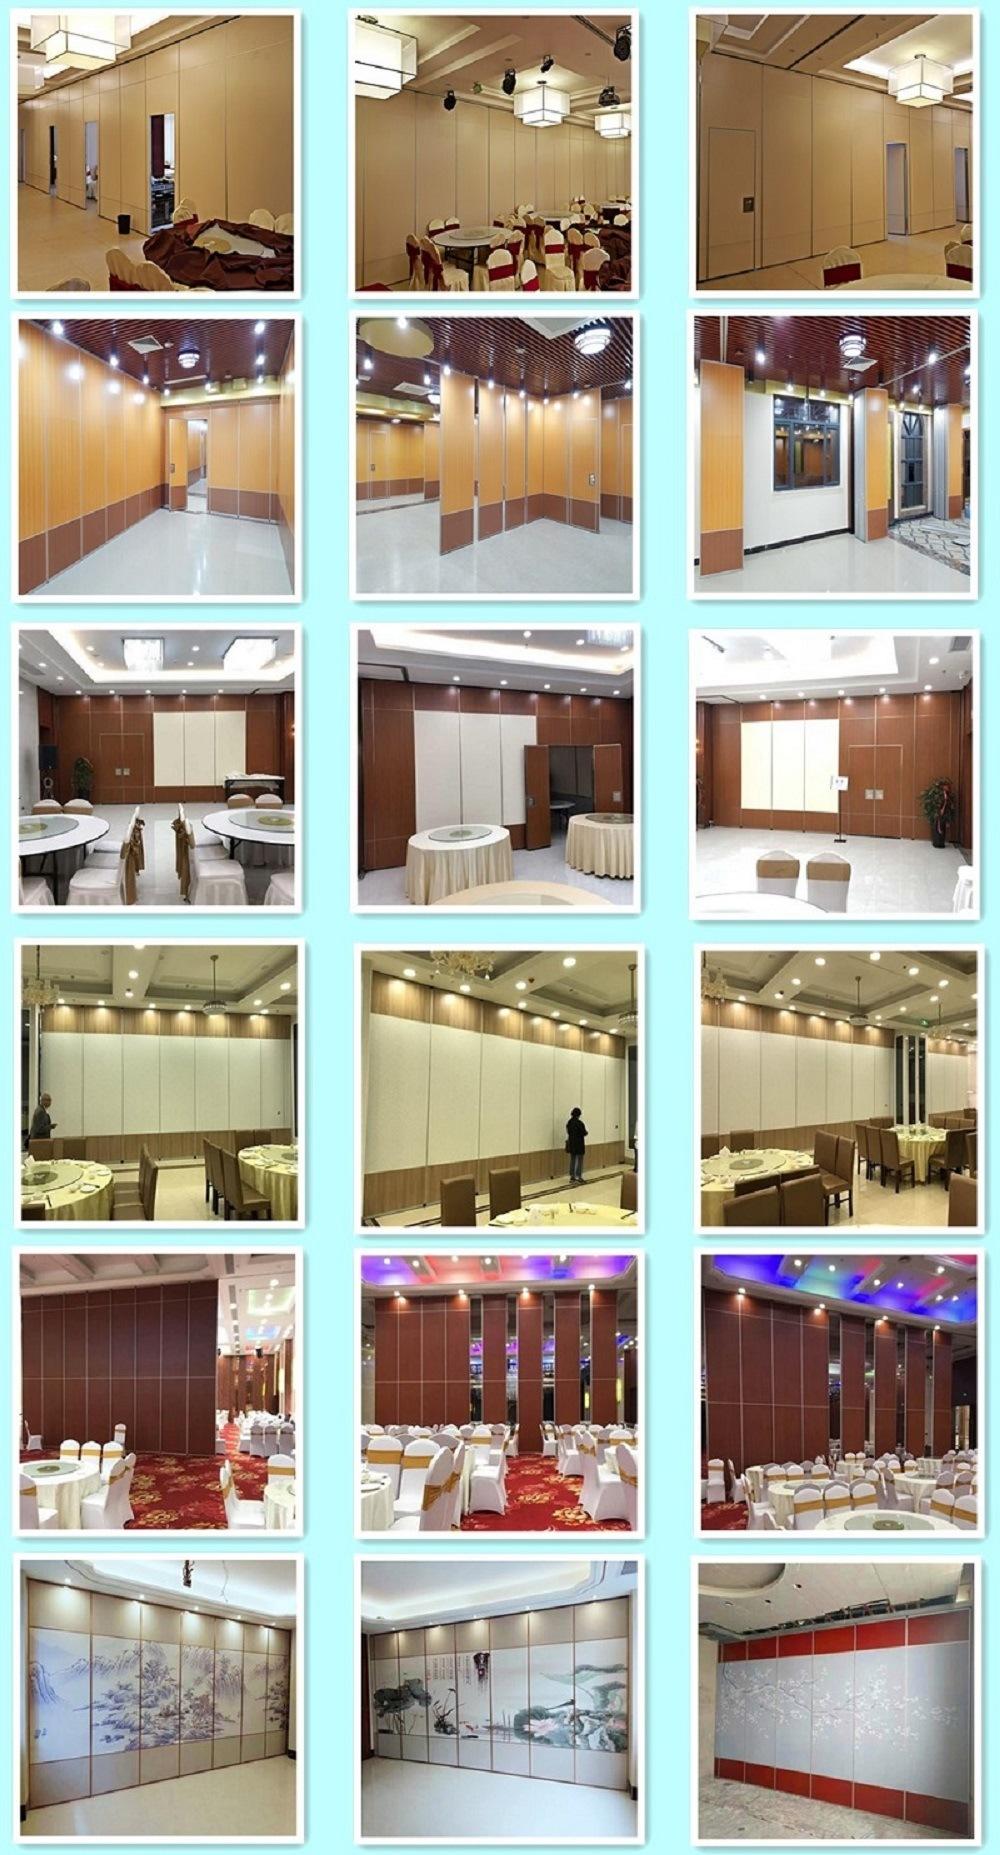 MDF Bi Fold Doors Flexible Folding Partition Walls